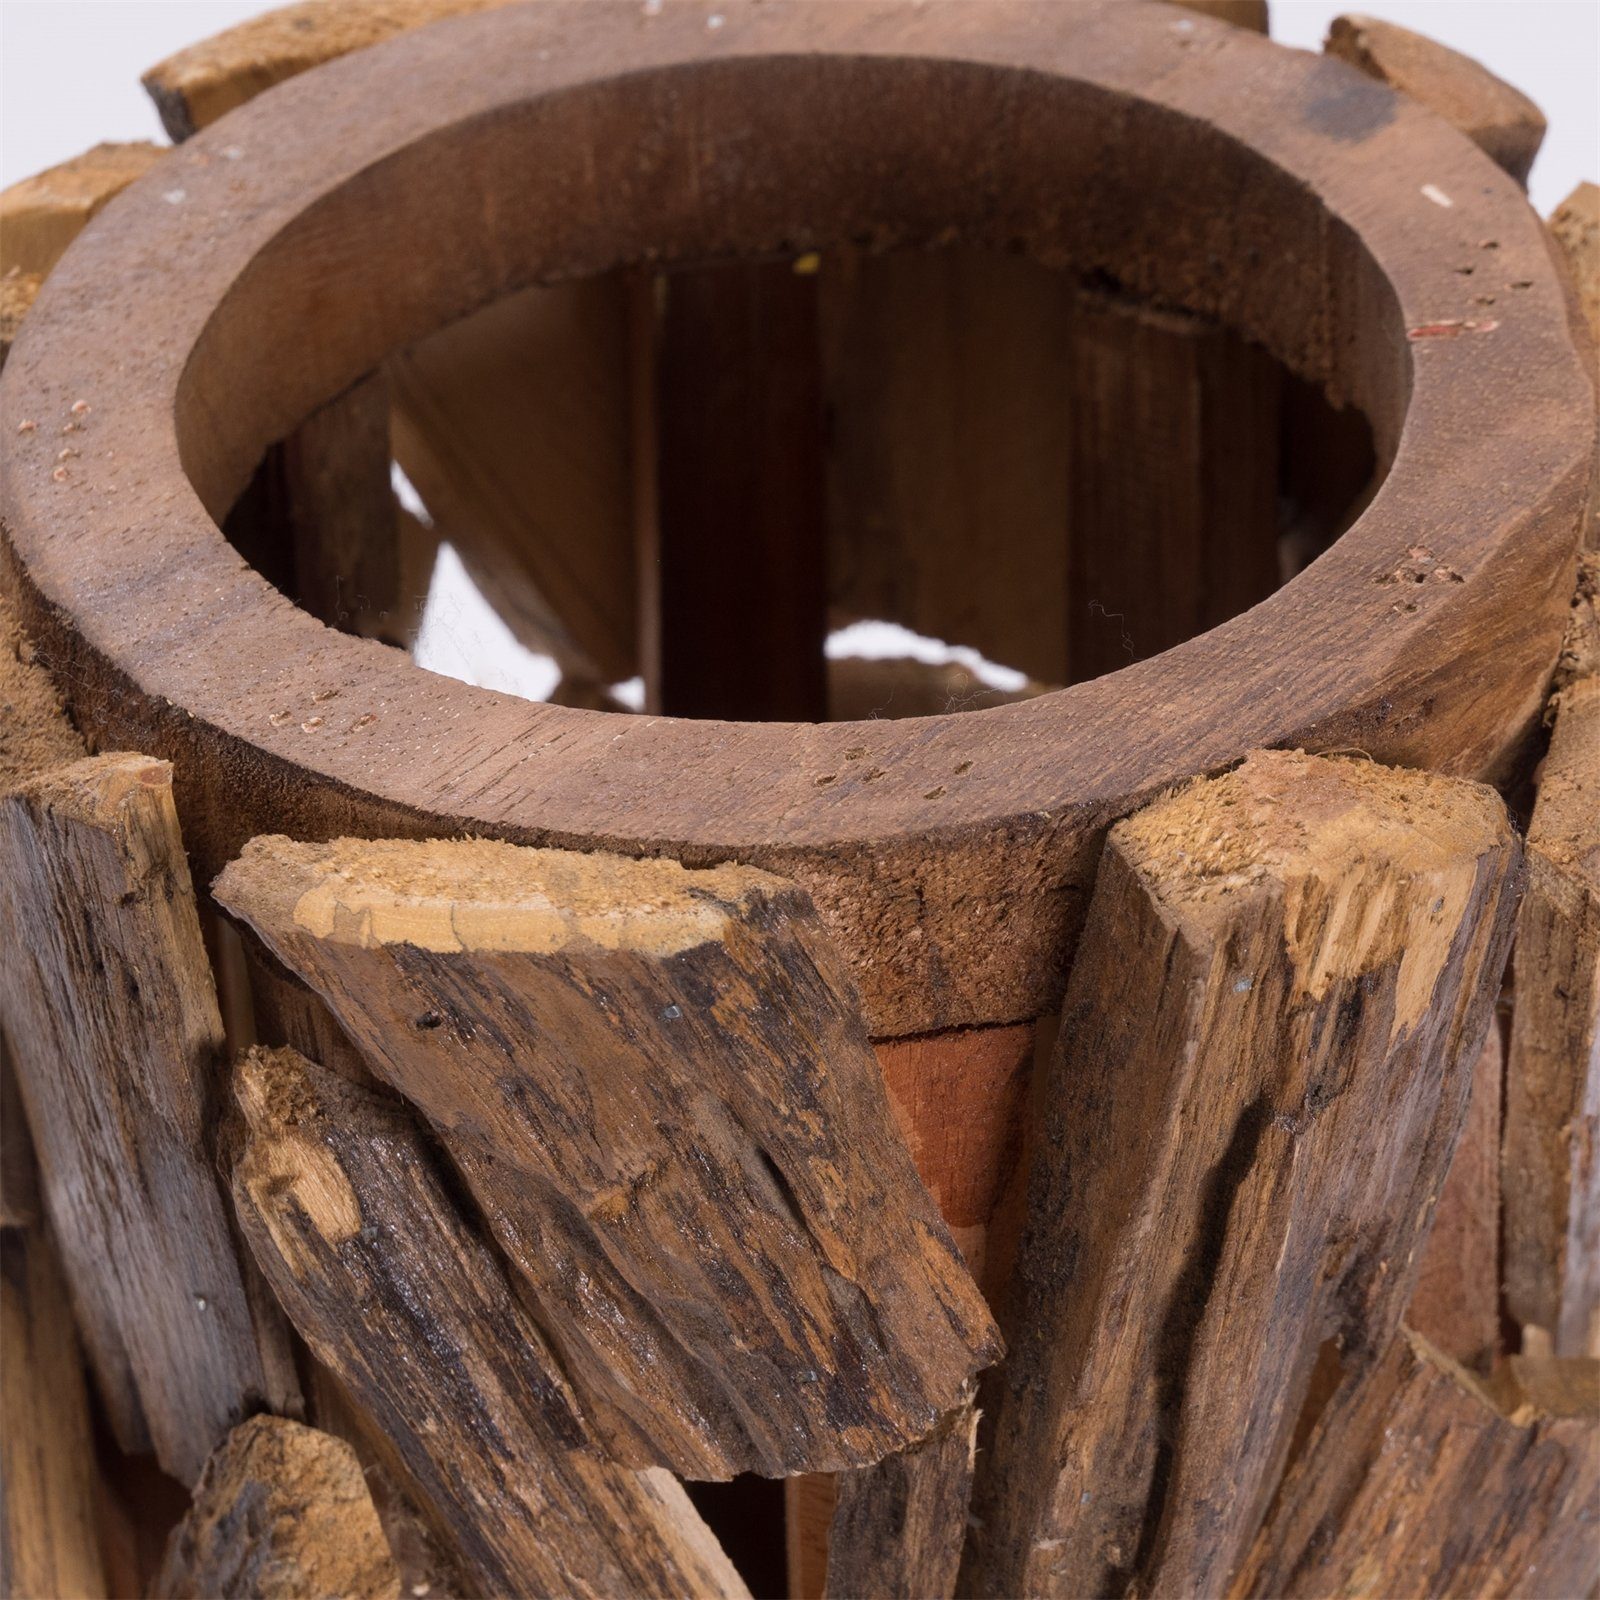 CREEDWOOD Dekosäule "VELA", Vase BODEN Holz Bodenleuchter, Teakholz, SÄULE 58 cm